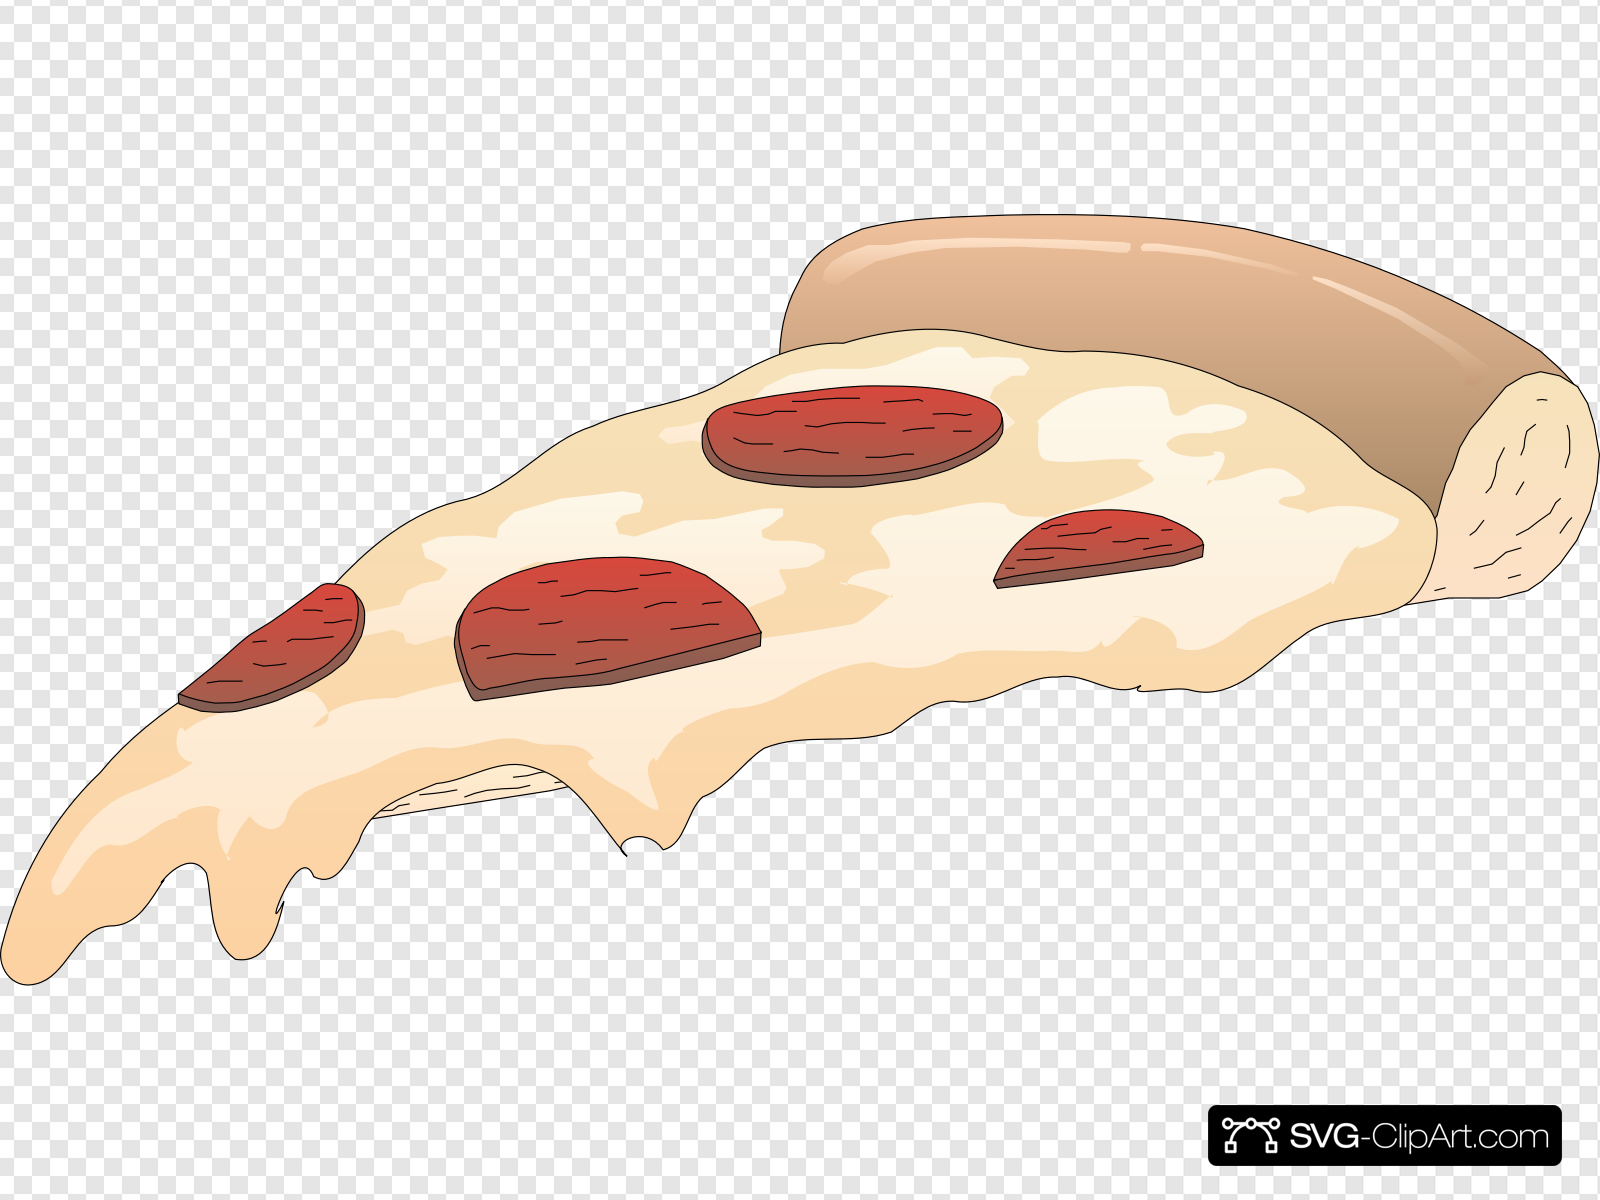 Pepperoni pizza slice.